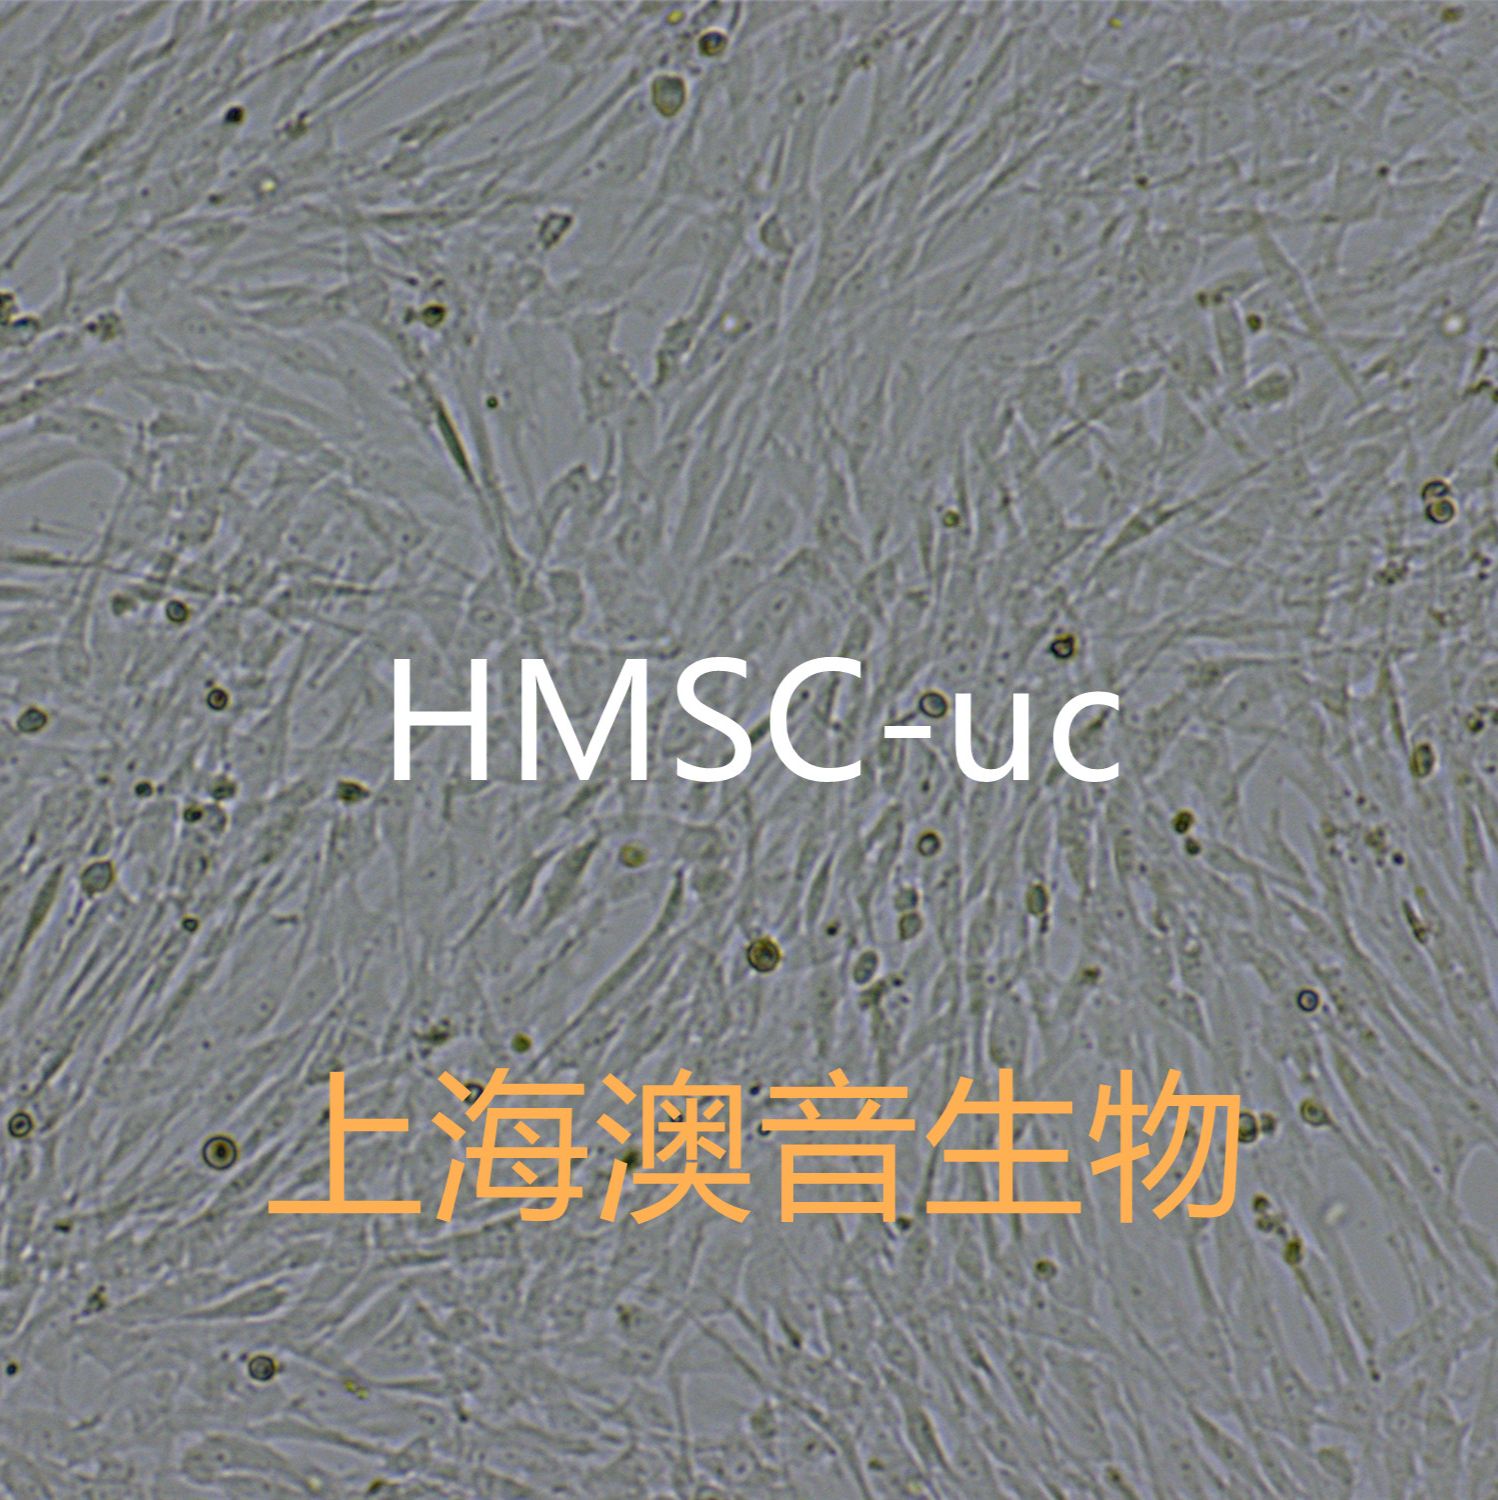 HMSC-uc/HUMSC脐带来源干细胞/脐带间充质干细胞/脐带干细胞